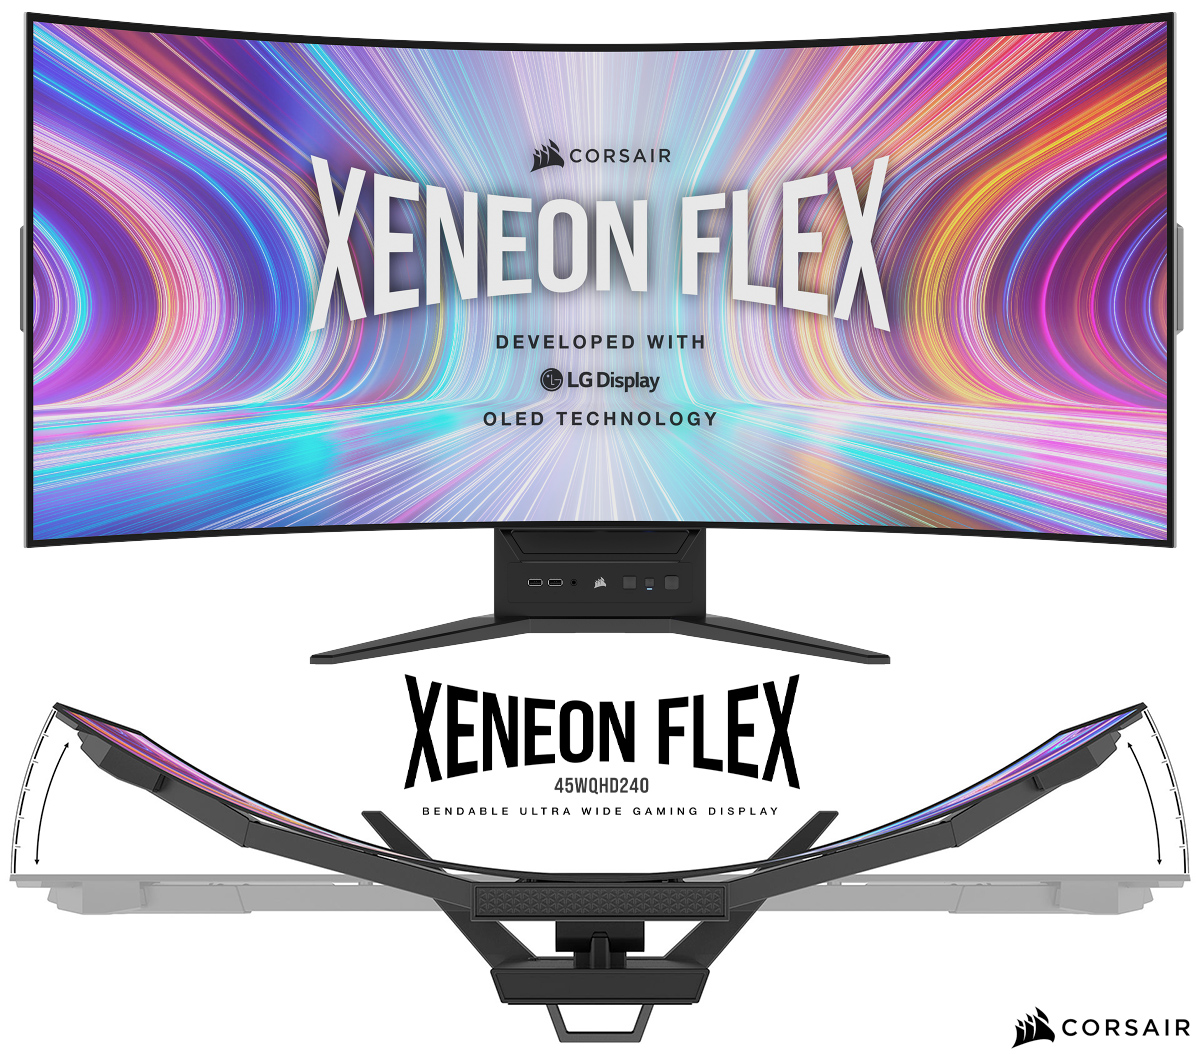 Monitor Corsair Xeneon Flex com tela flexível que fica curva ou plana